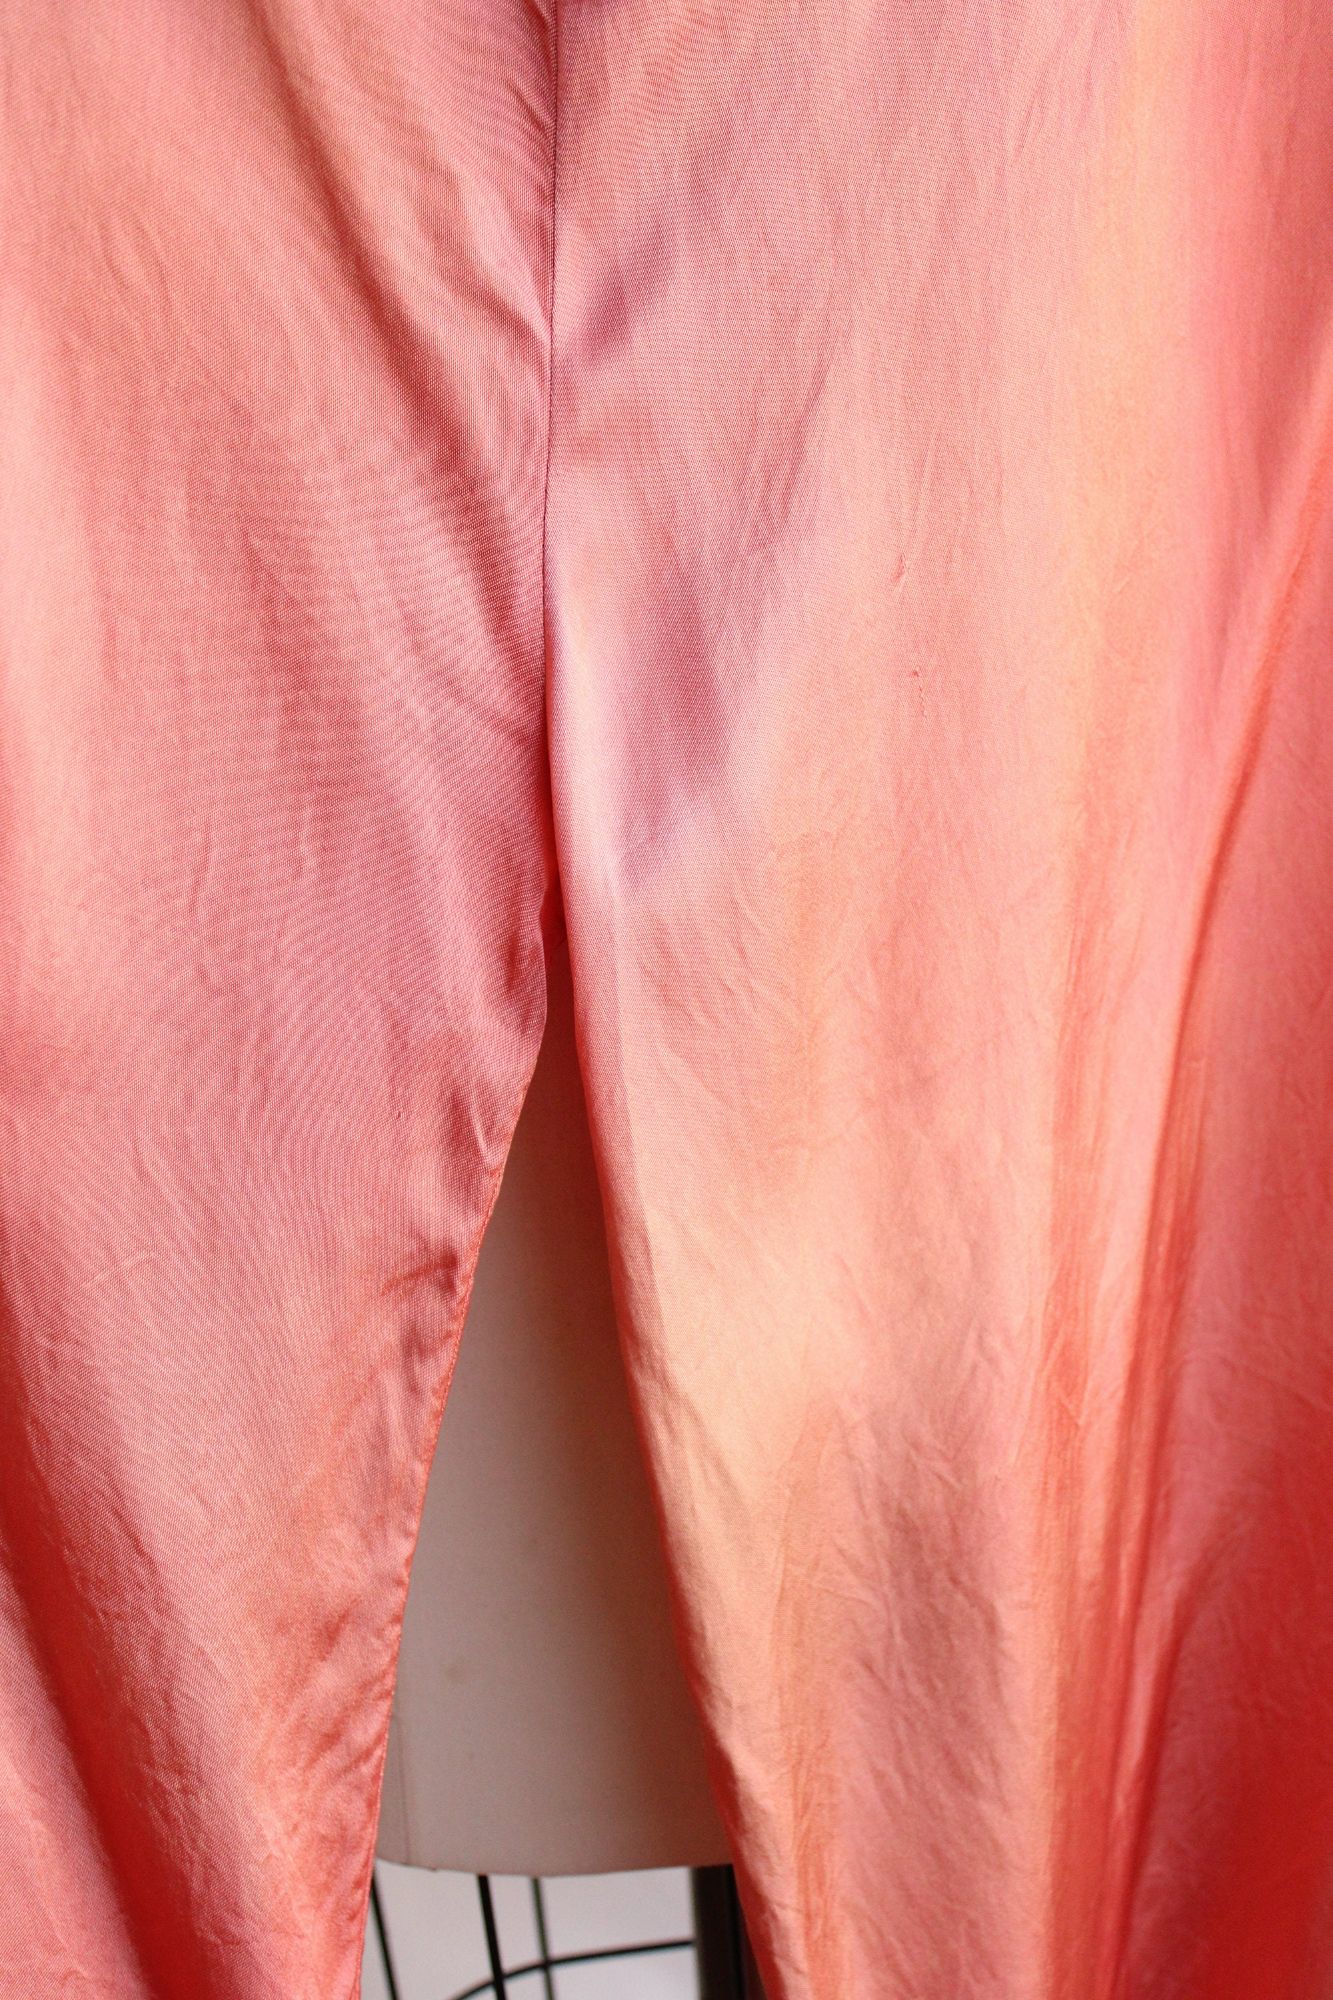 Vintage 1940s Pink Satin Wide Legged Pajama Pants